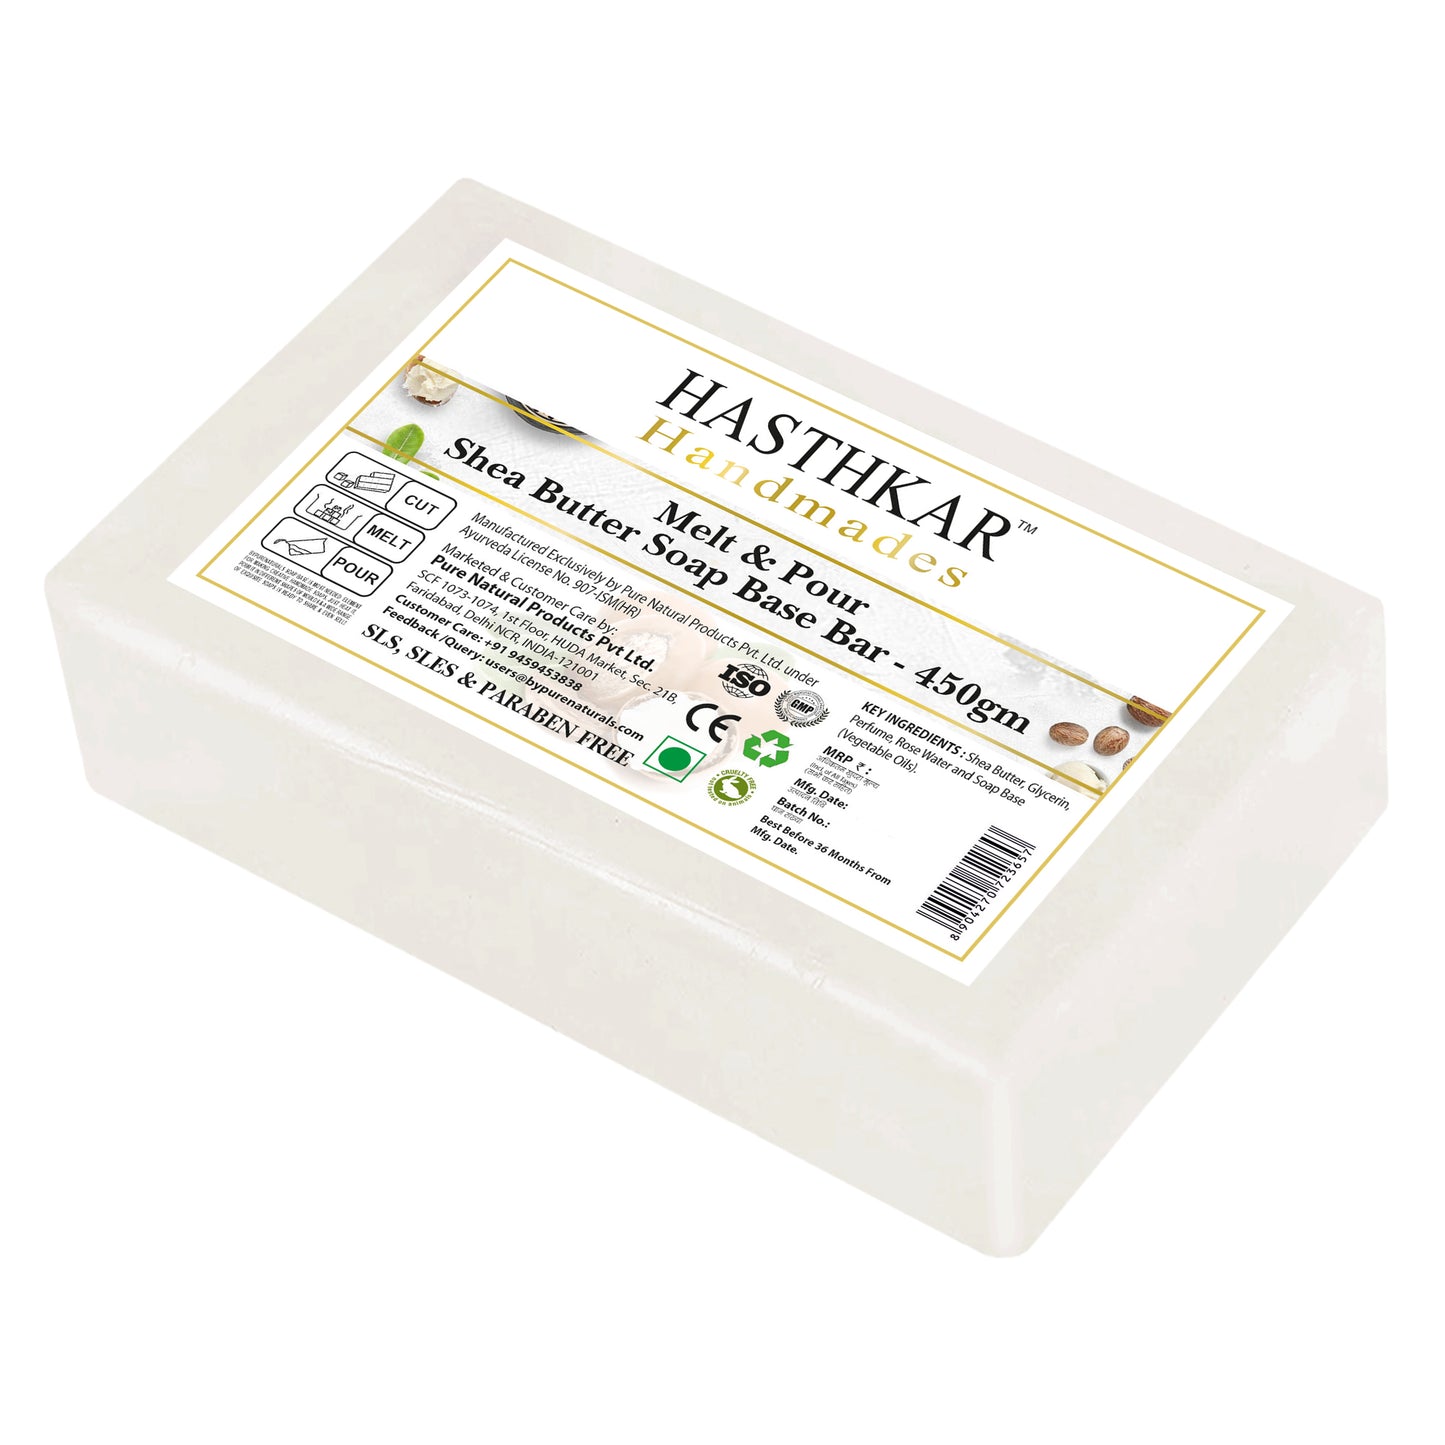 Hasthkar Handmades Soap Base Bar Shea Butter 450gm Pack of 2-1